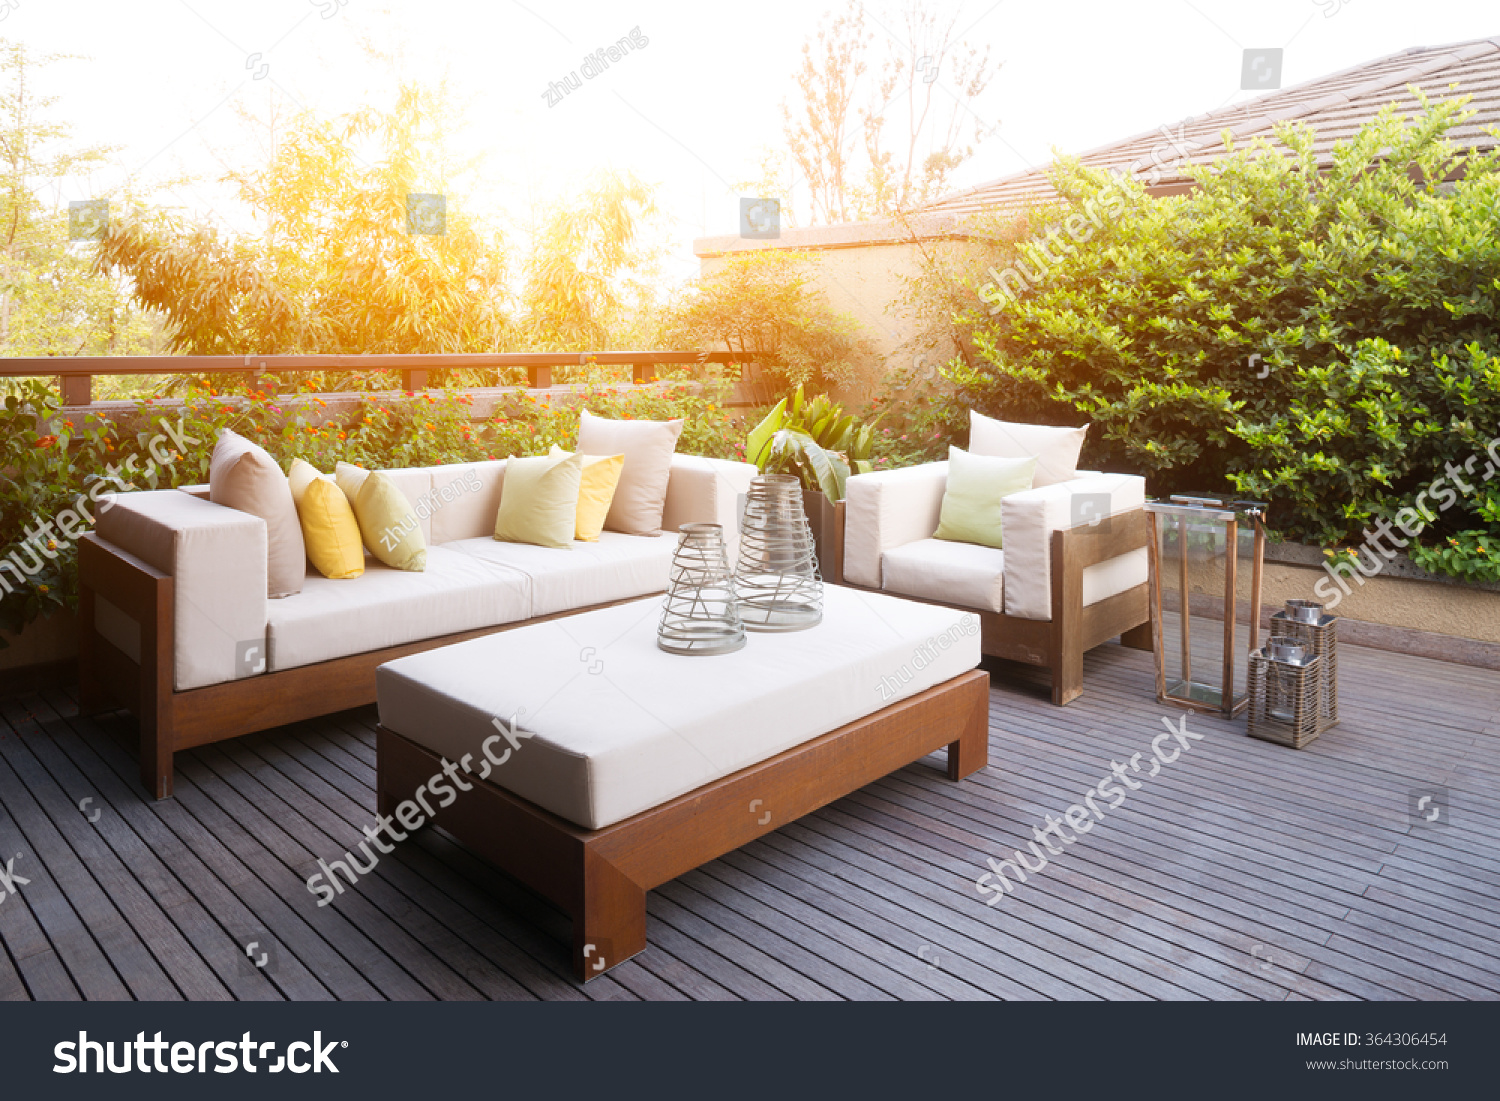 design and furniture in modern patio #364306454